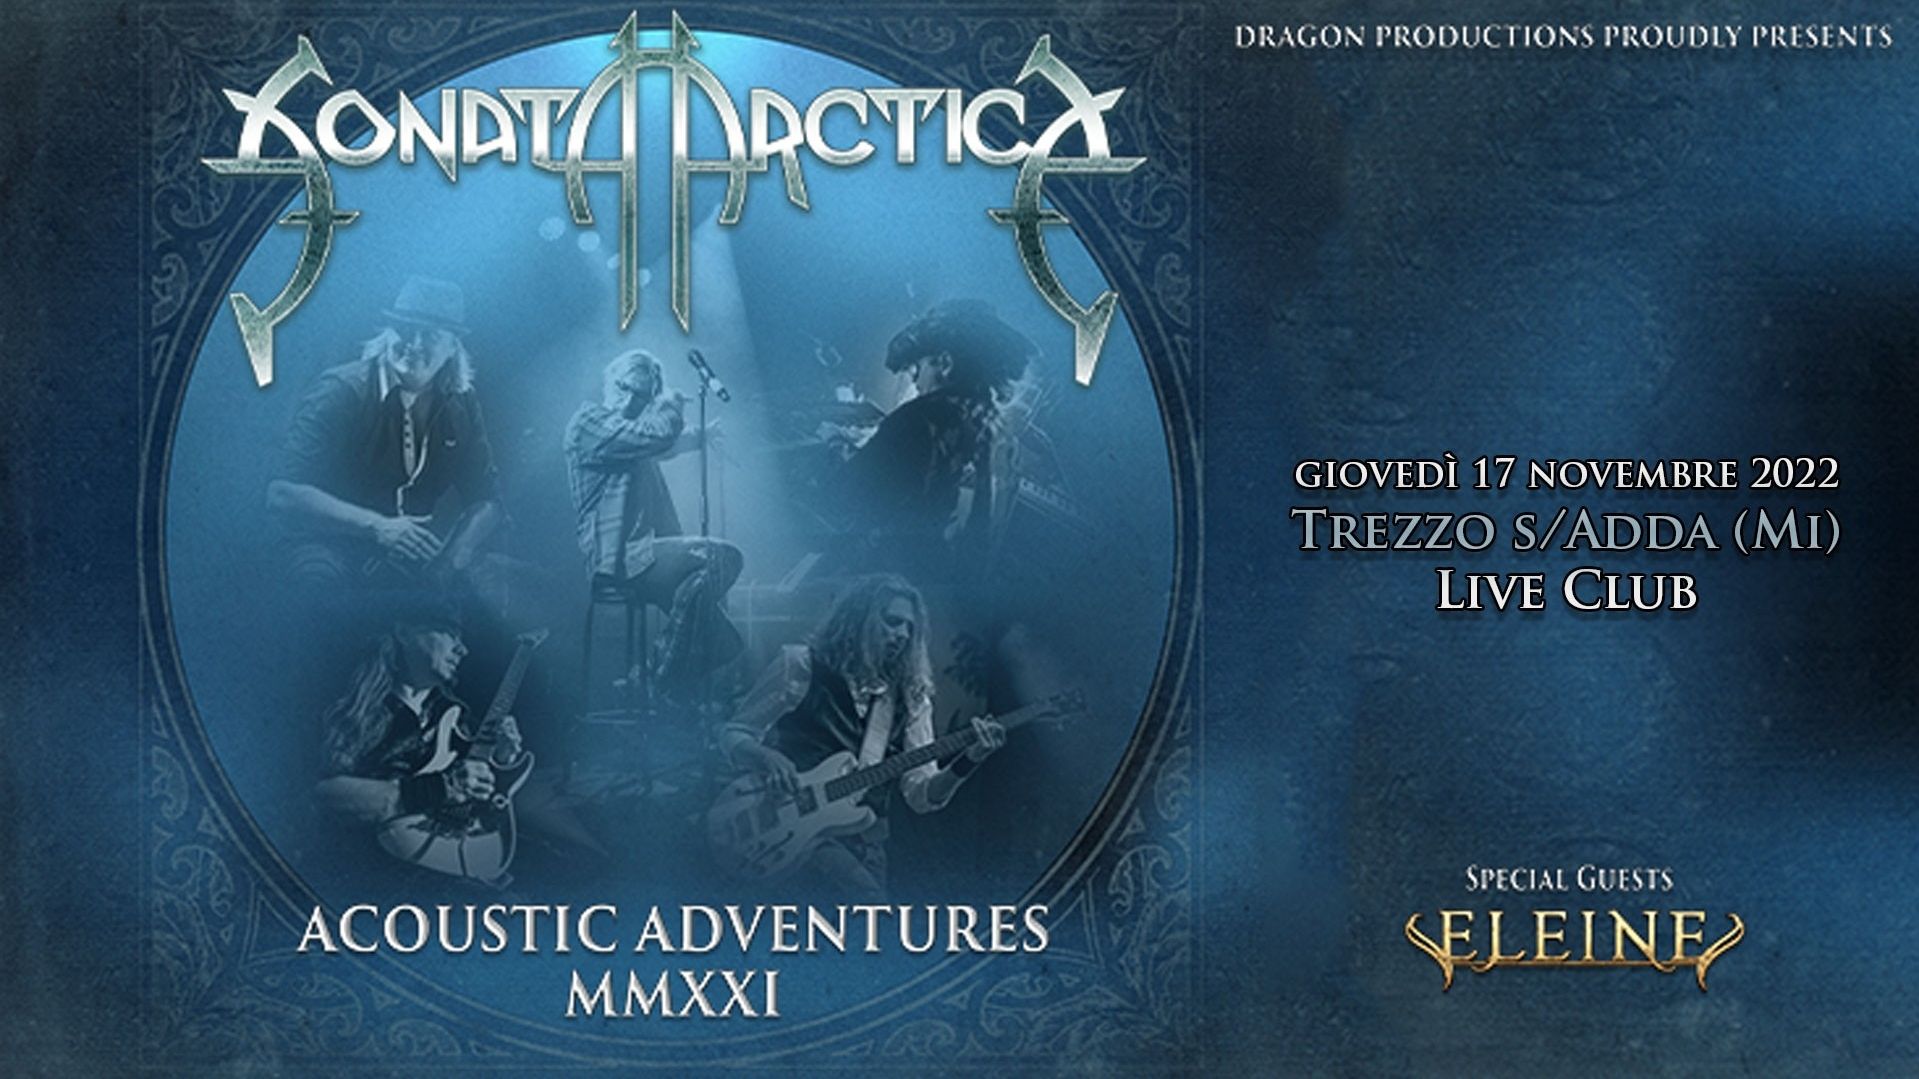 Sonata Arctica - Acoustic Adventures MMXXI + Eleine